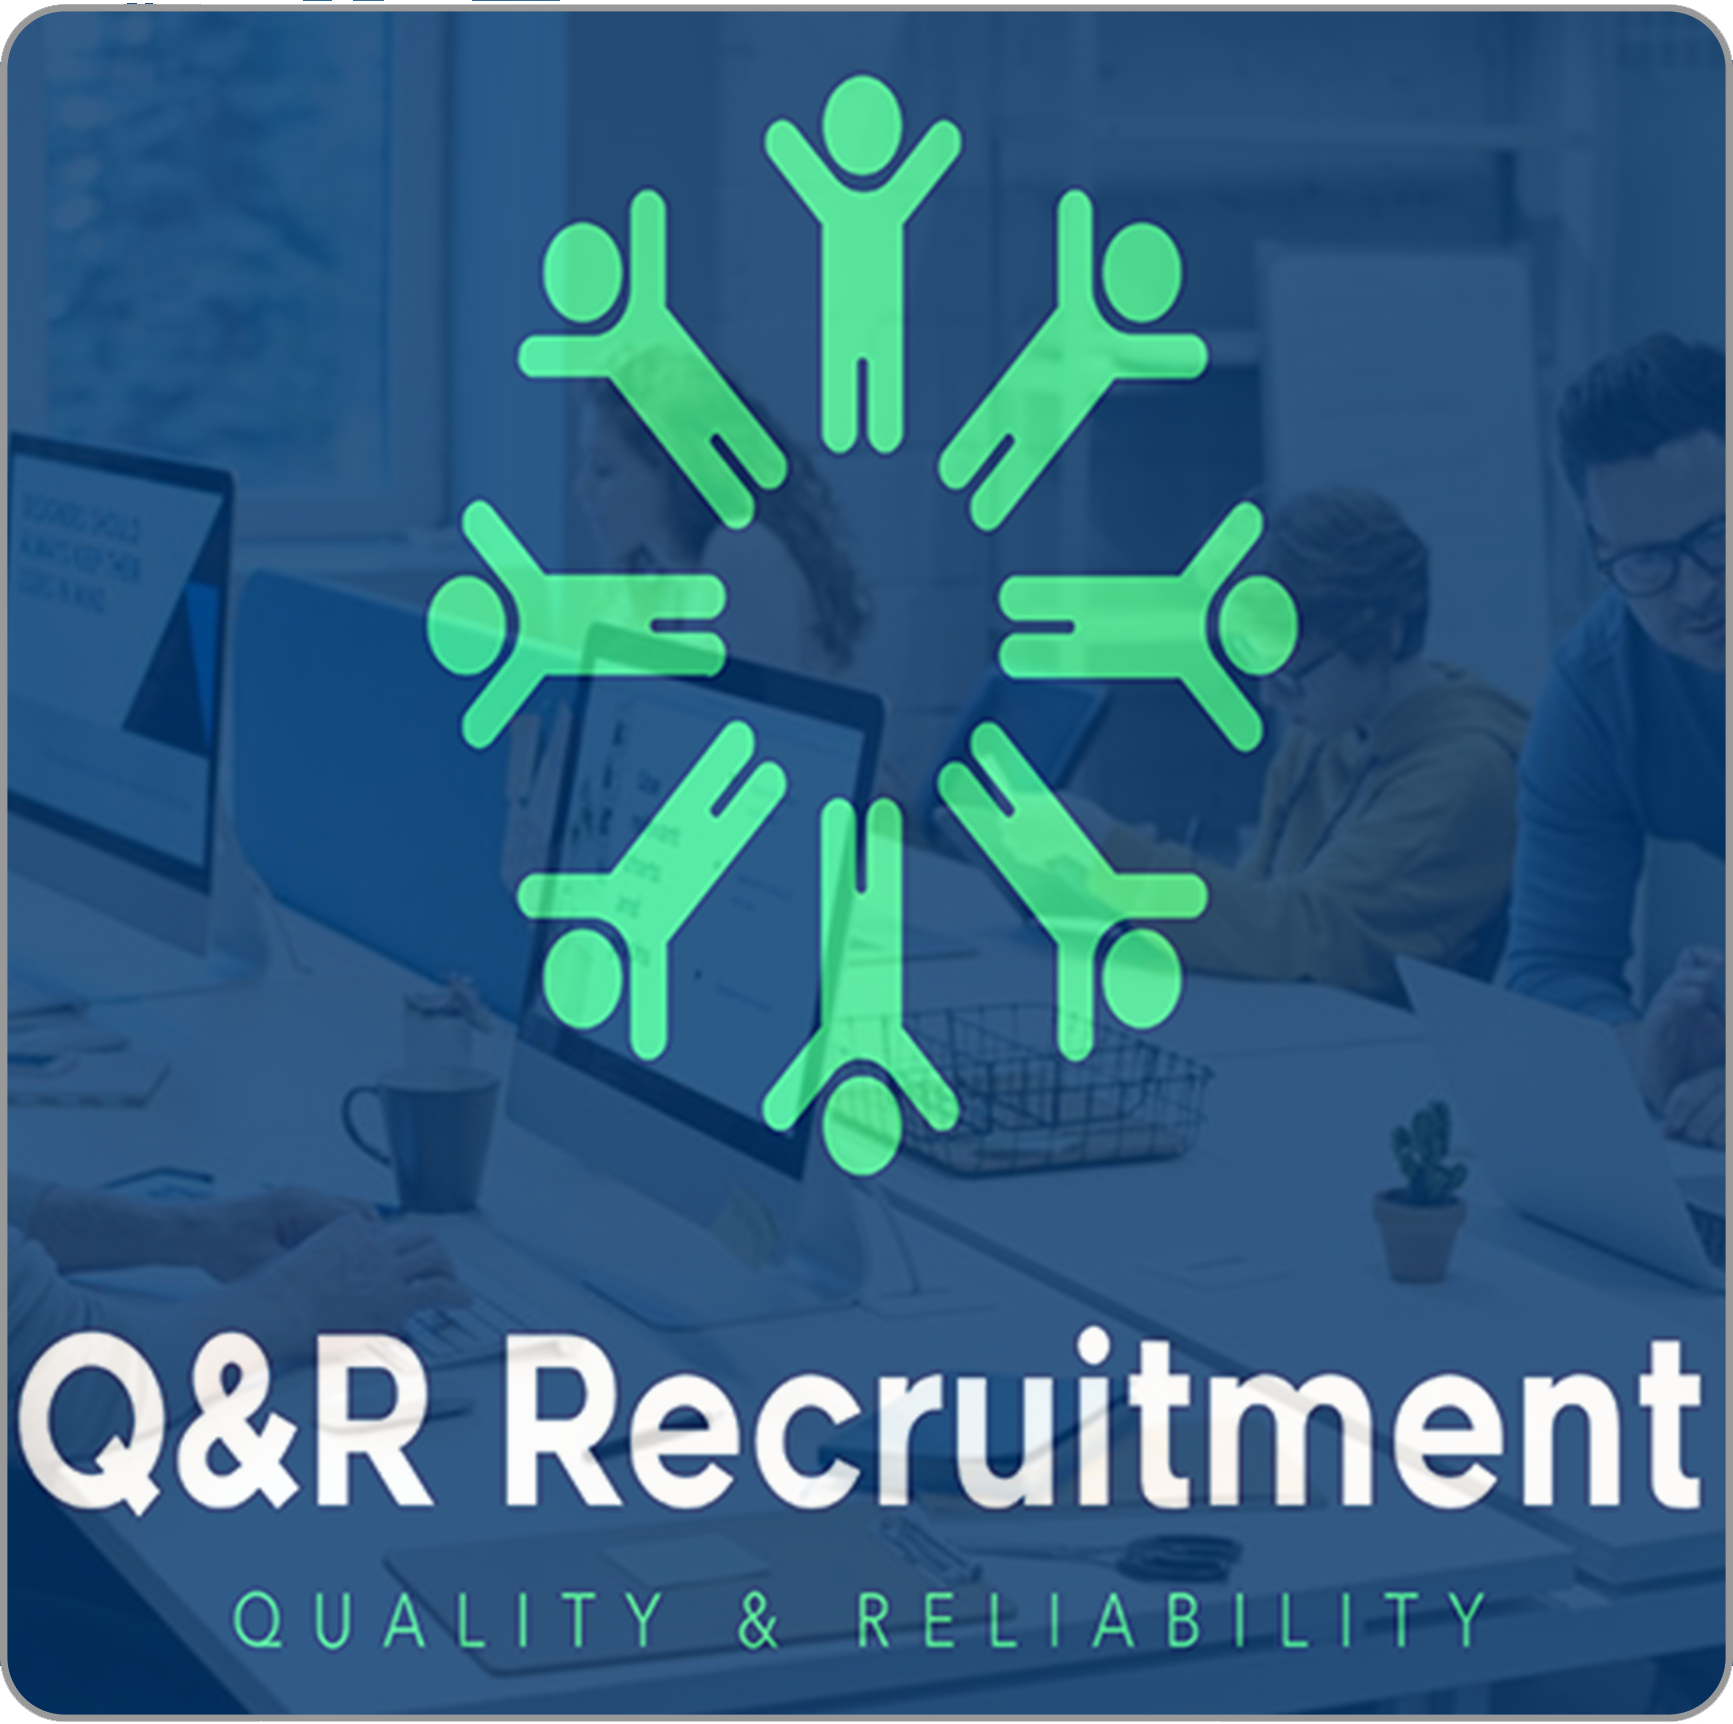 About Q & R Recruitment